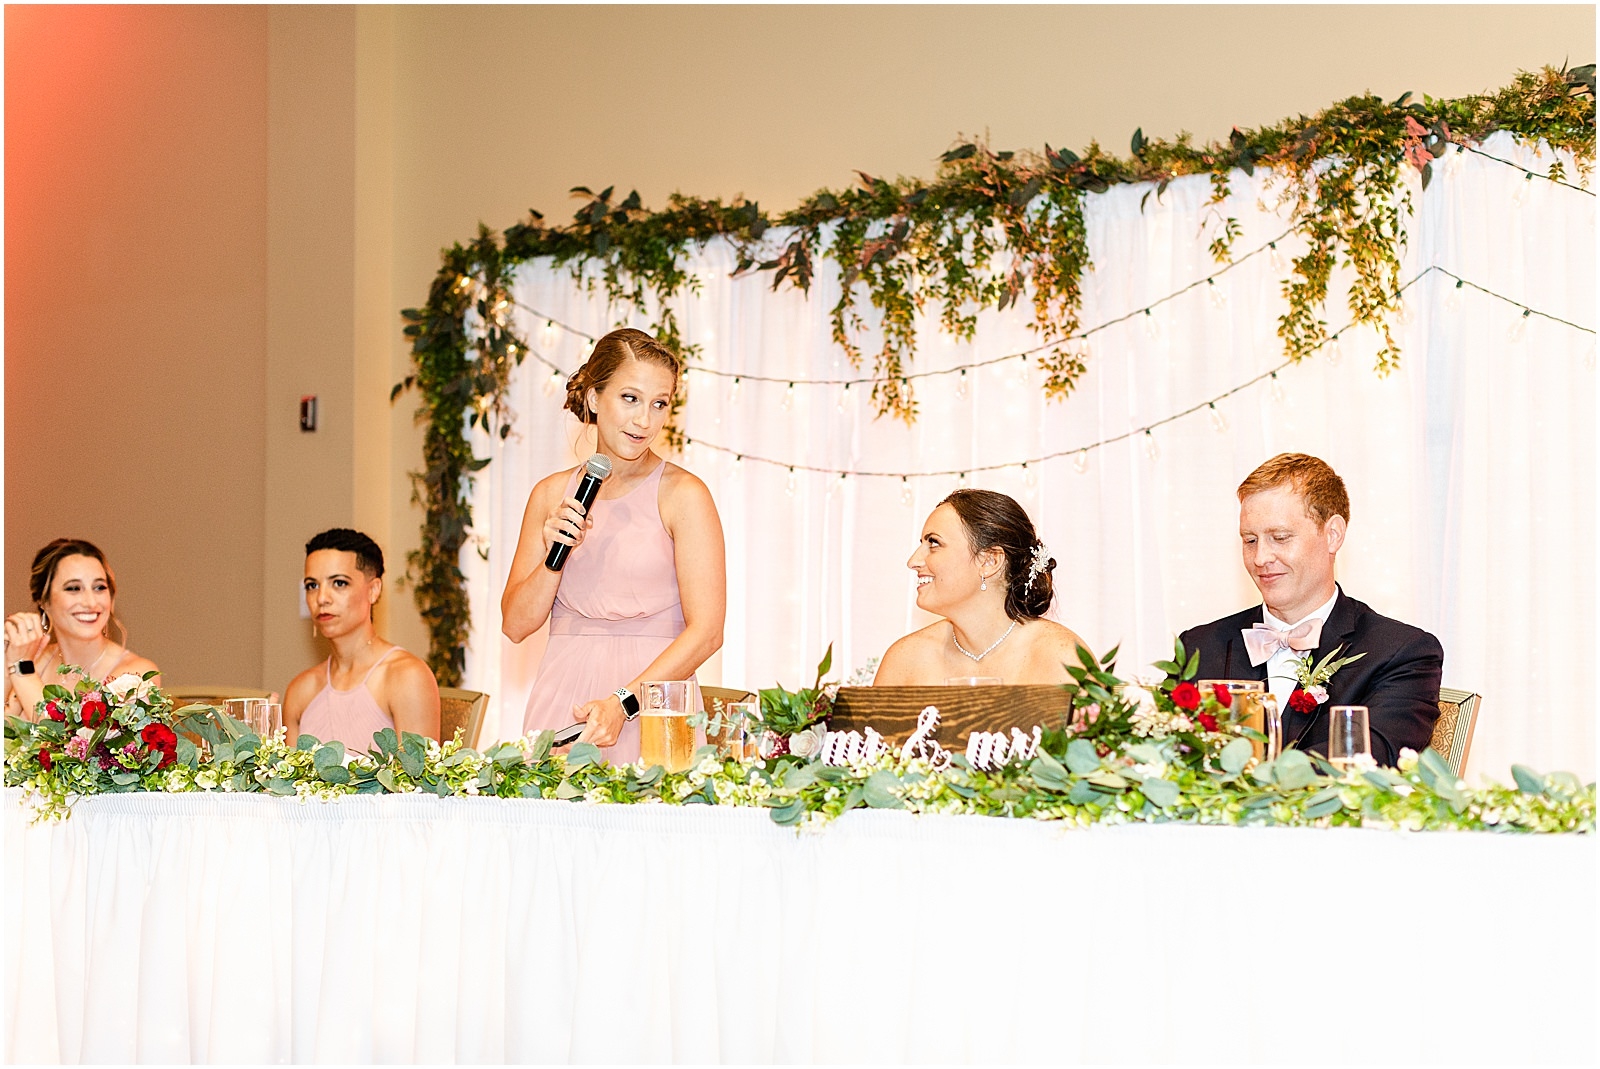 Deidra and Andrew | A Huntingburgh Indiana Wedding Bret and Brandie | Evansville Photographers | @bretandbrandie-0143.jpg